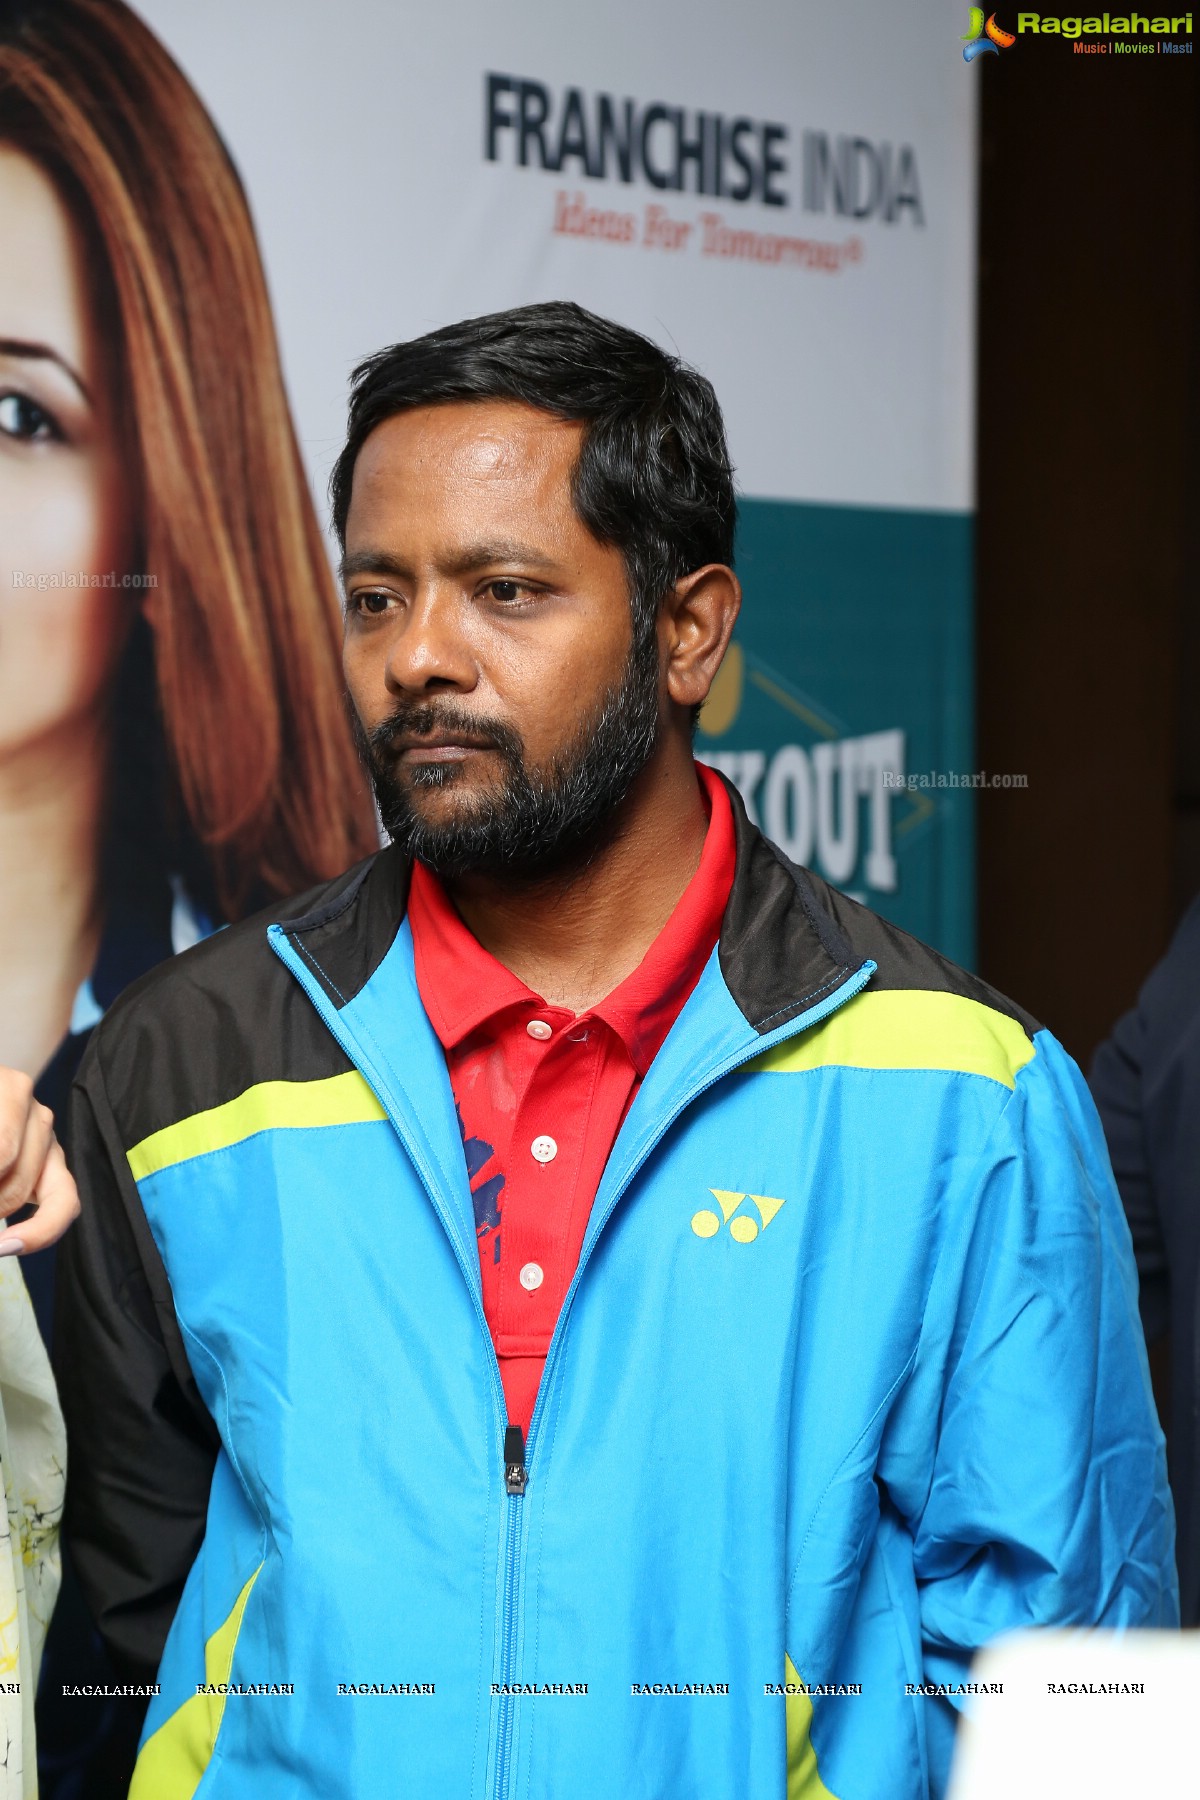 Jwala Gutta's Global Academy for Badminton Launch at Hotel Novotel, Hyderabad